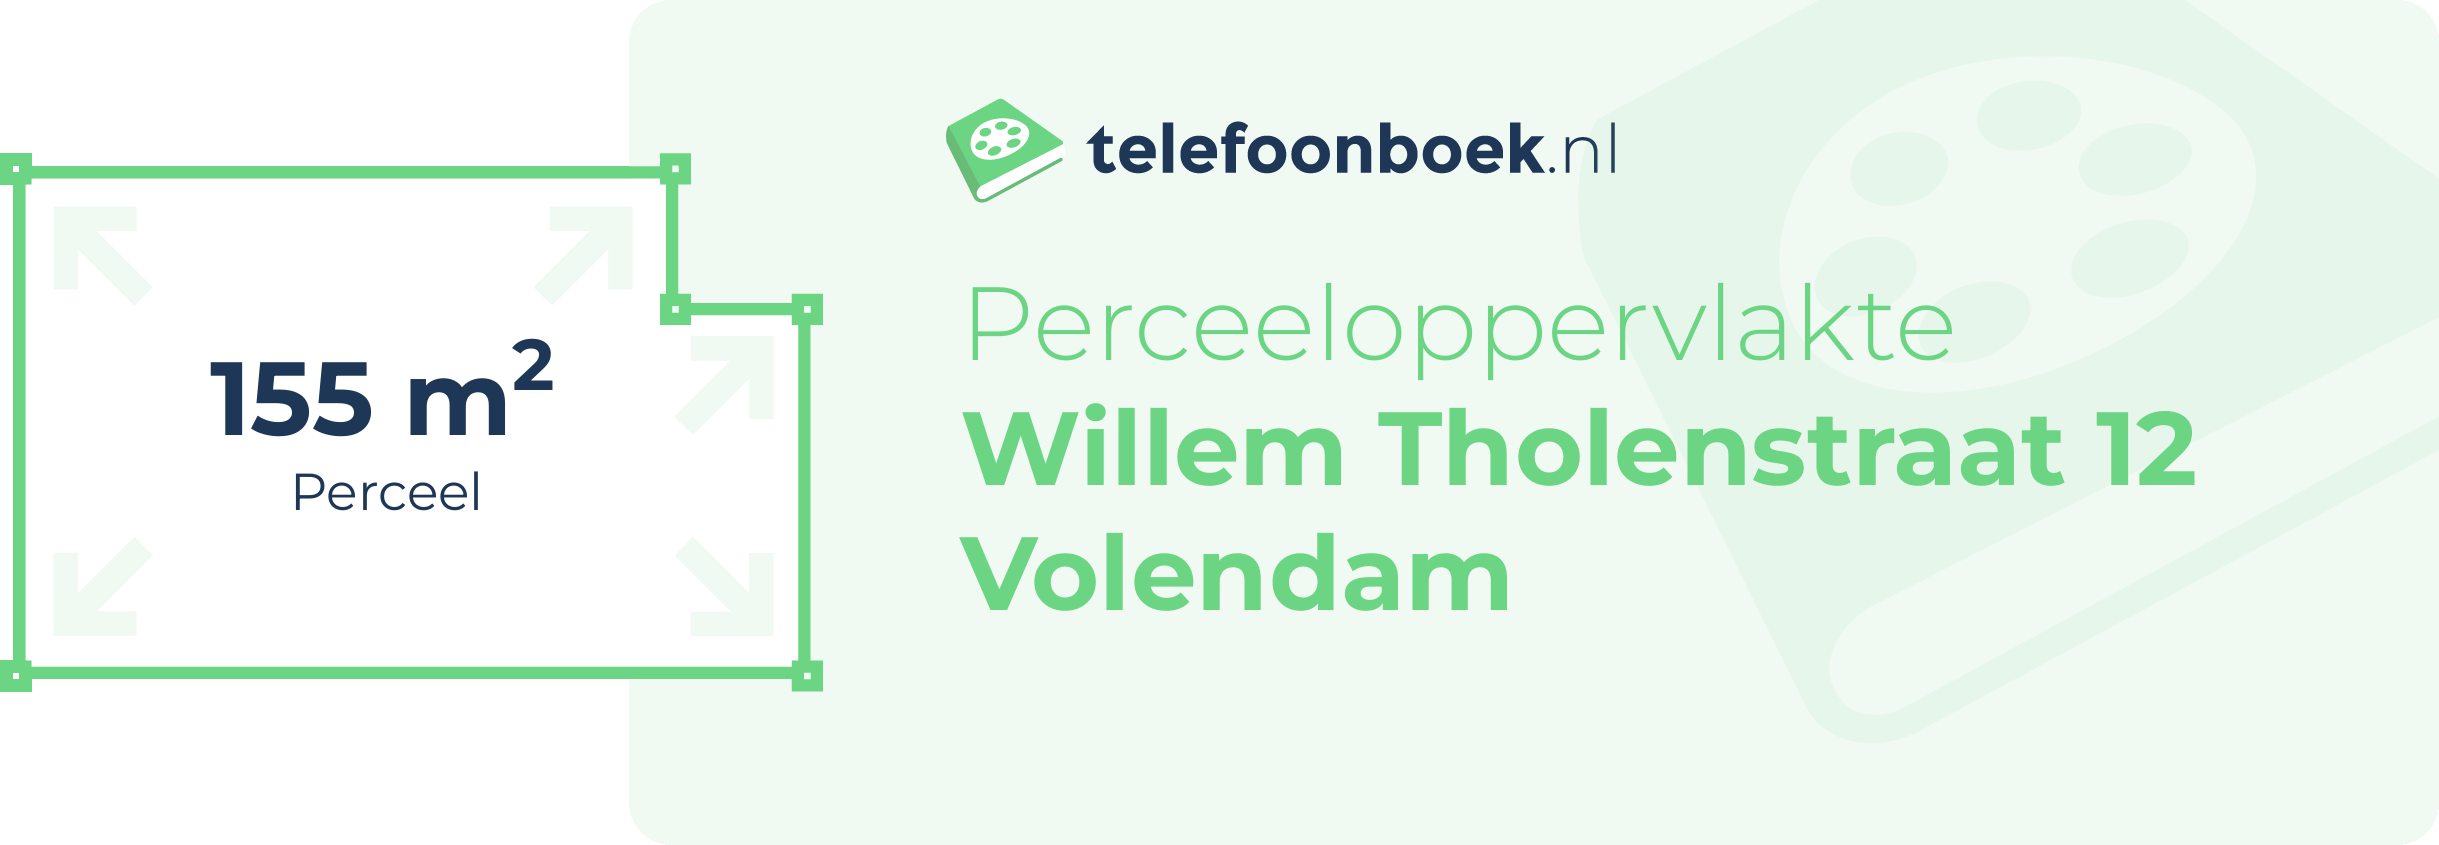 Perceeloppervlakte Willem Tholenstraat 12 Volendam